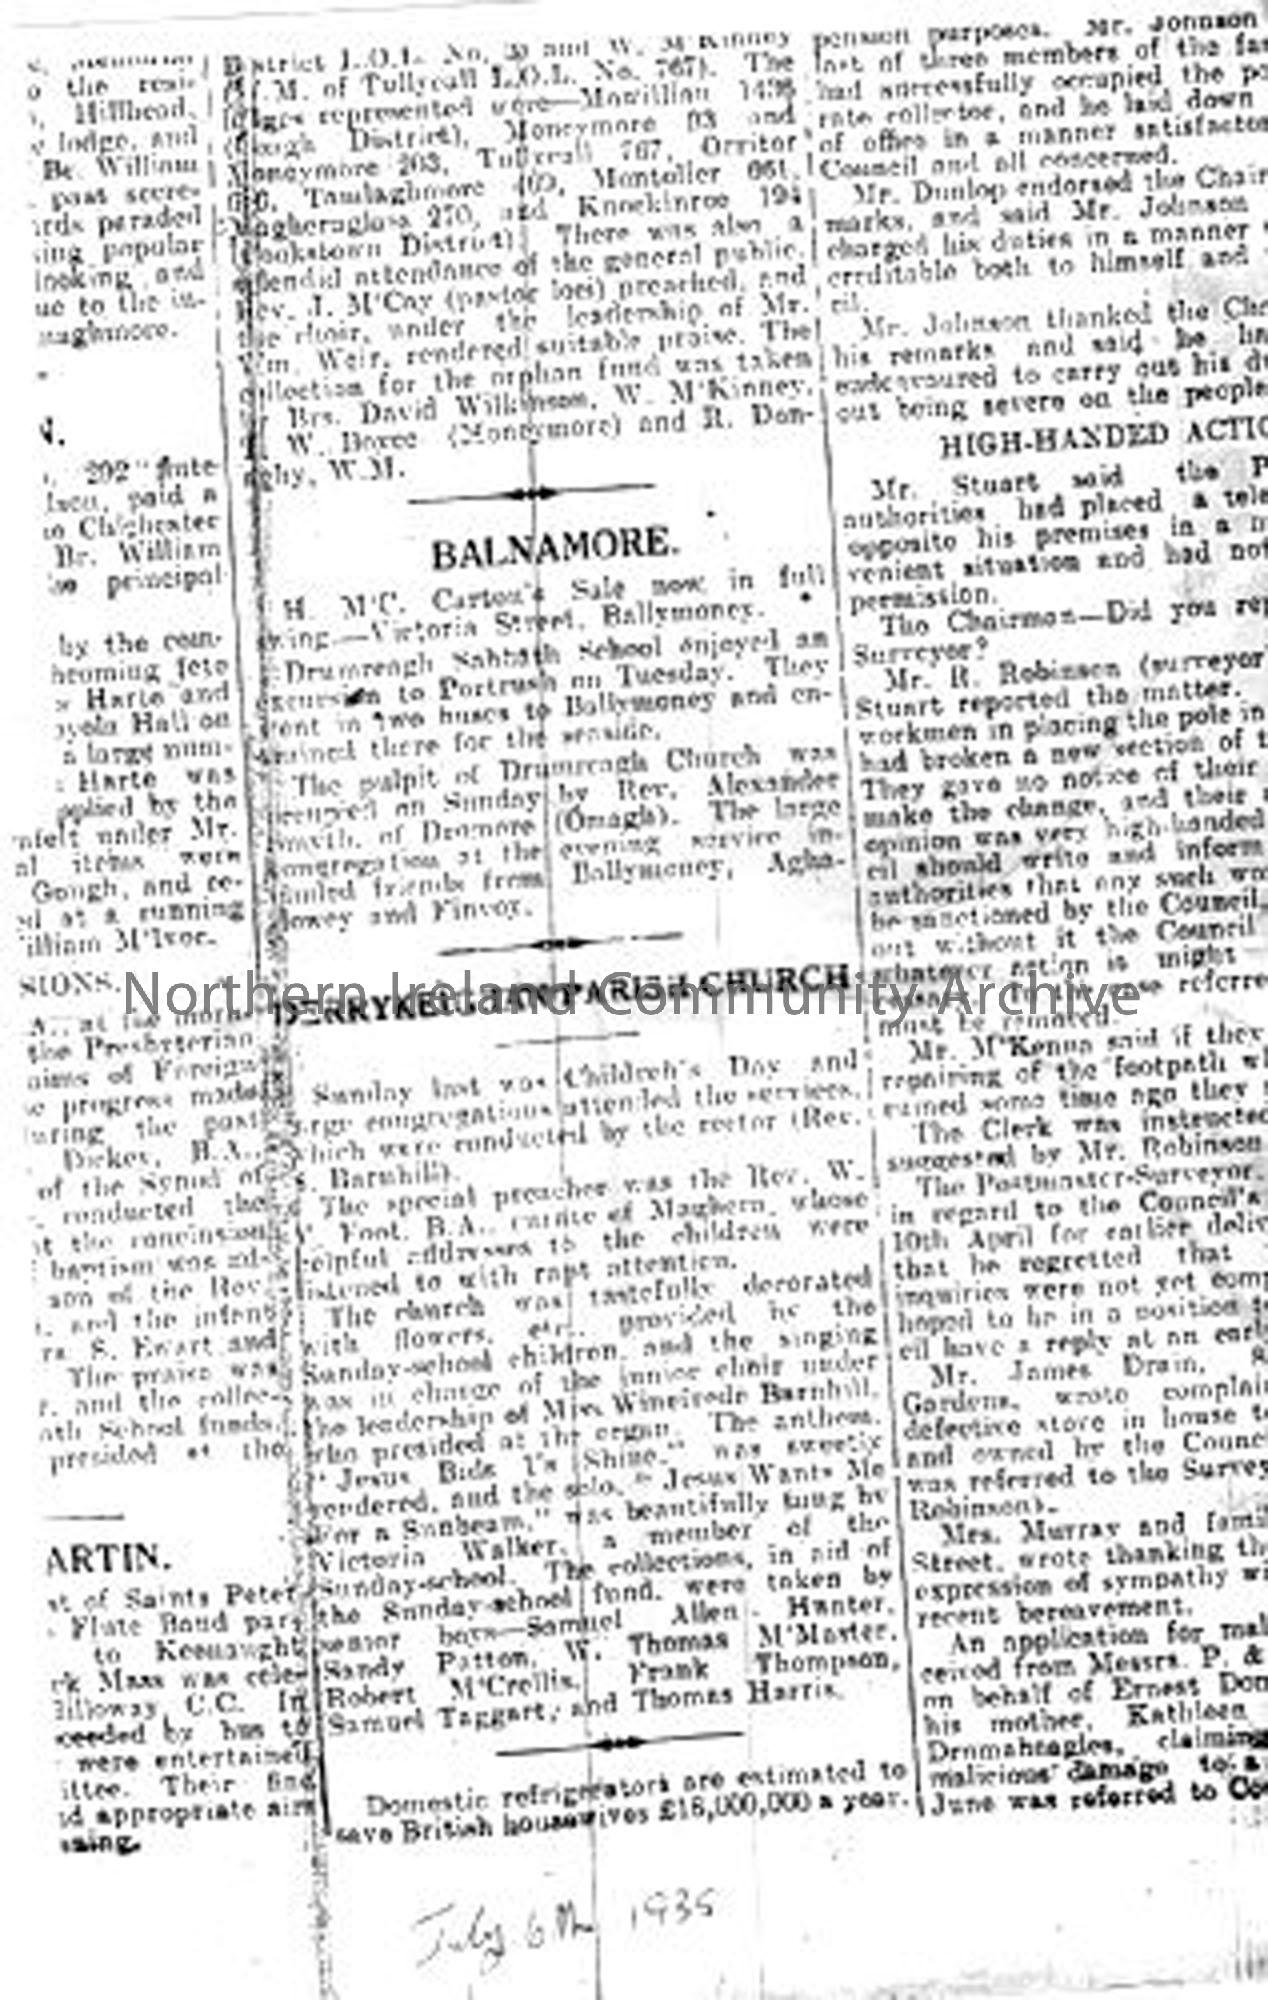 Newspaper article on Derrykeighan Parish Church (1065)